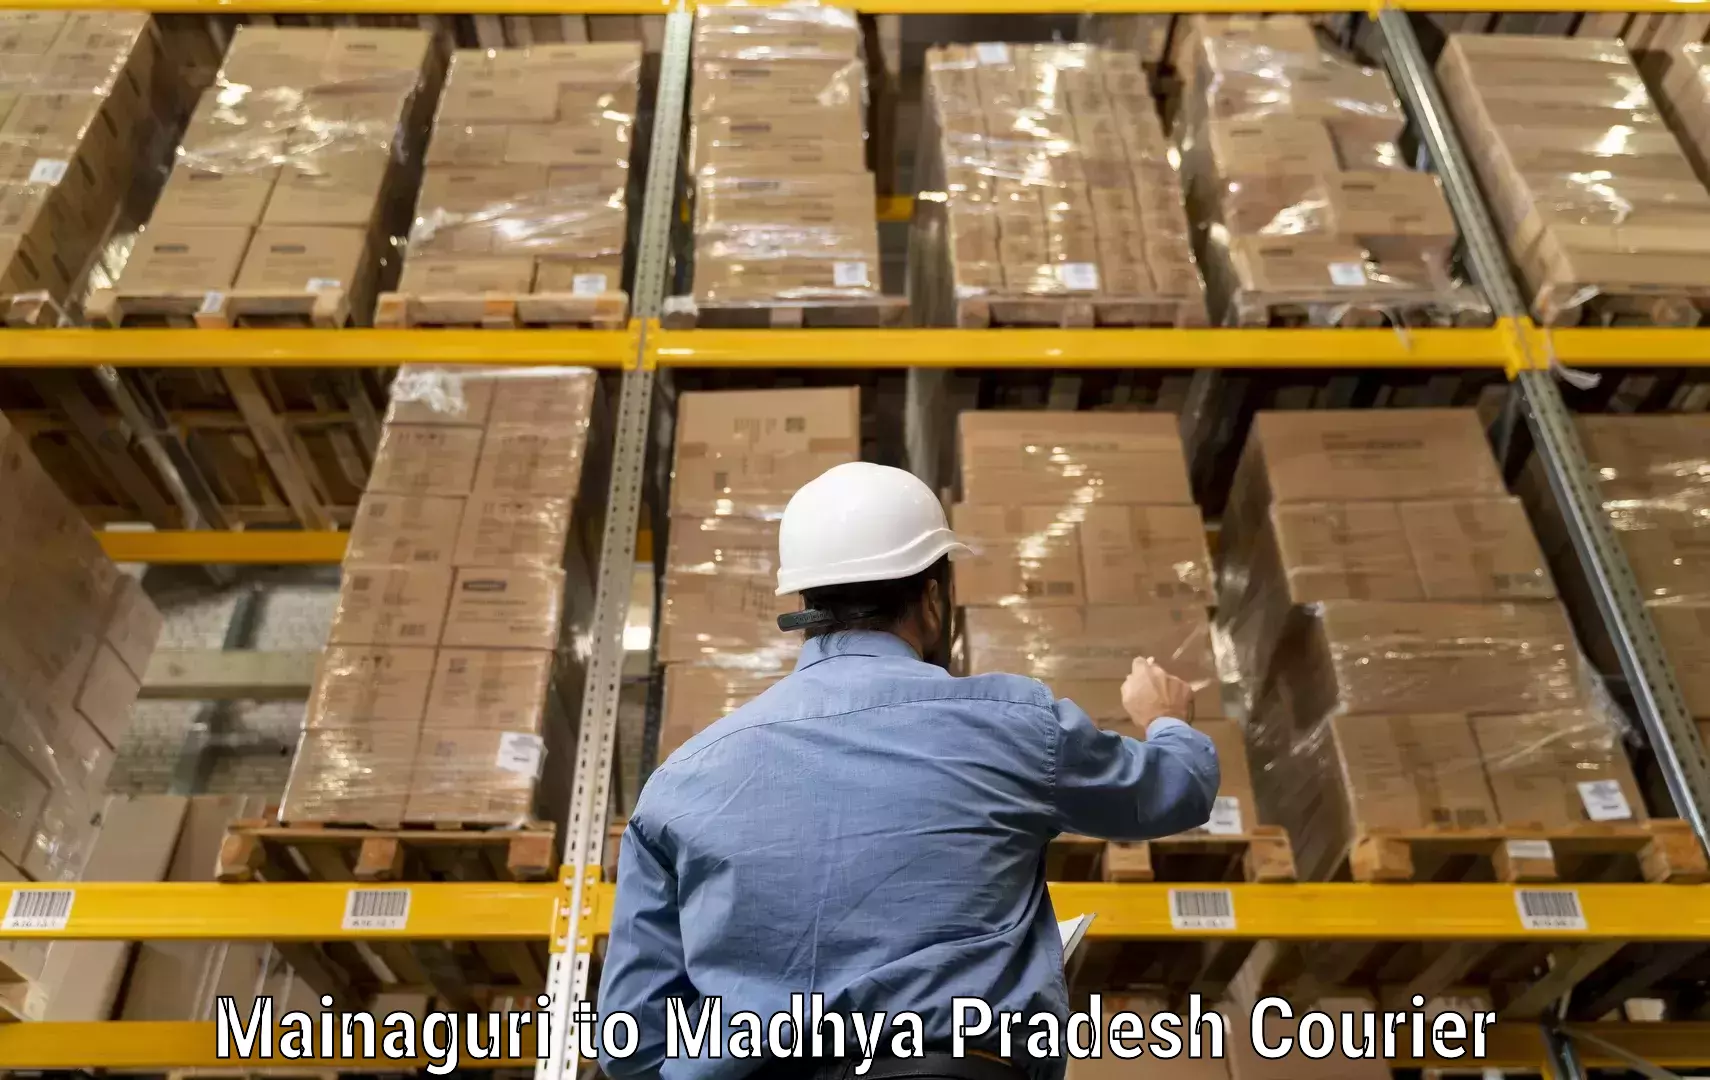 Global courier networks Mainaguri to Madhya Pradesh